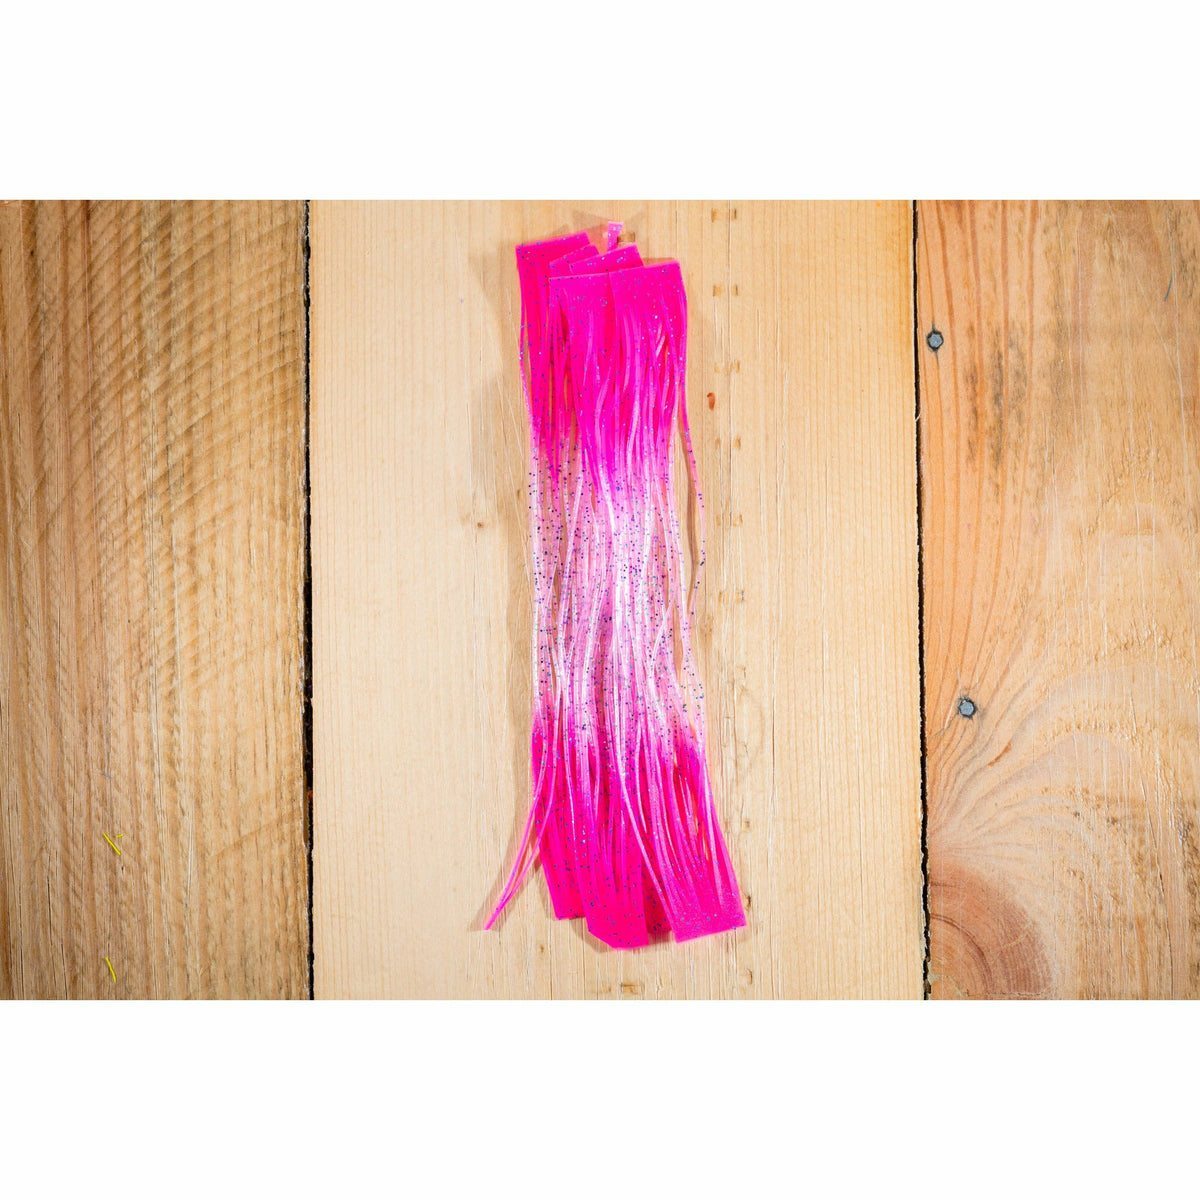 Pseudo Hair - Hot Pink (D) – 239 Flies